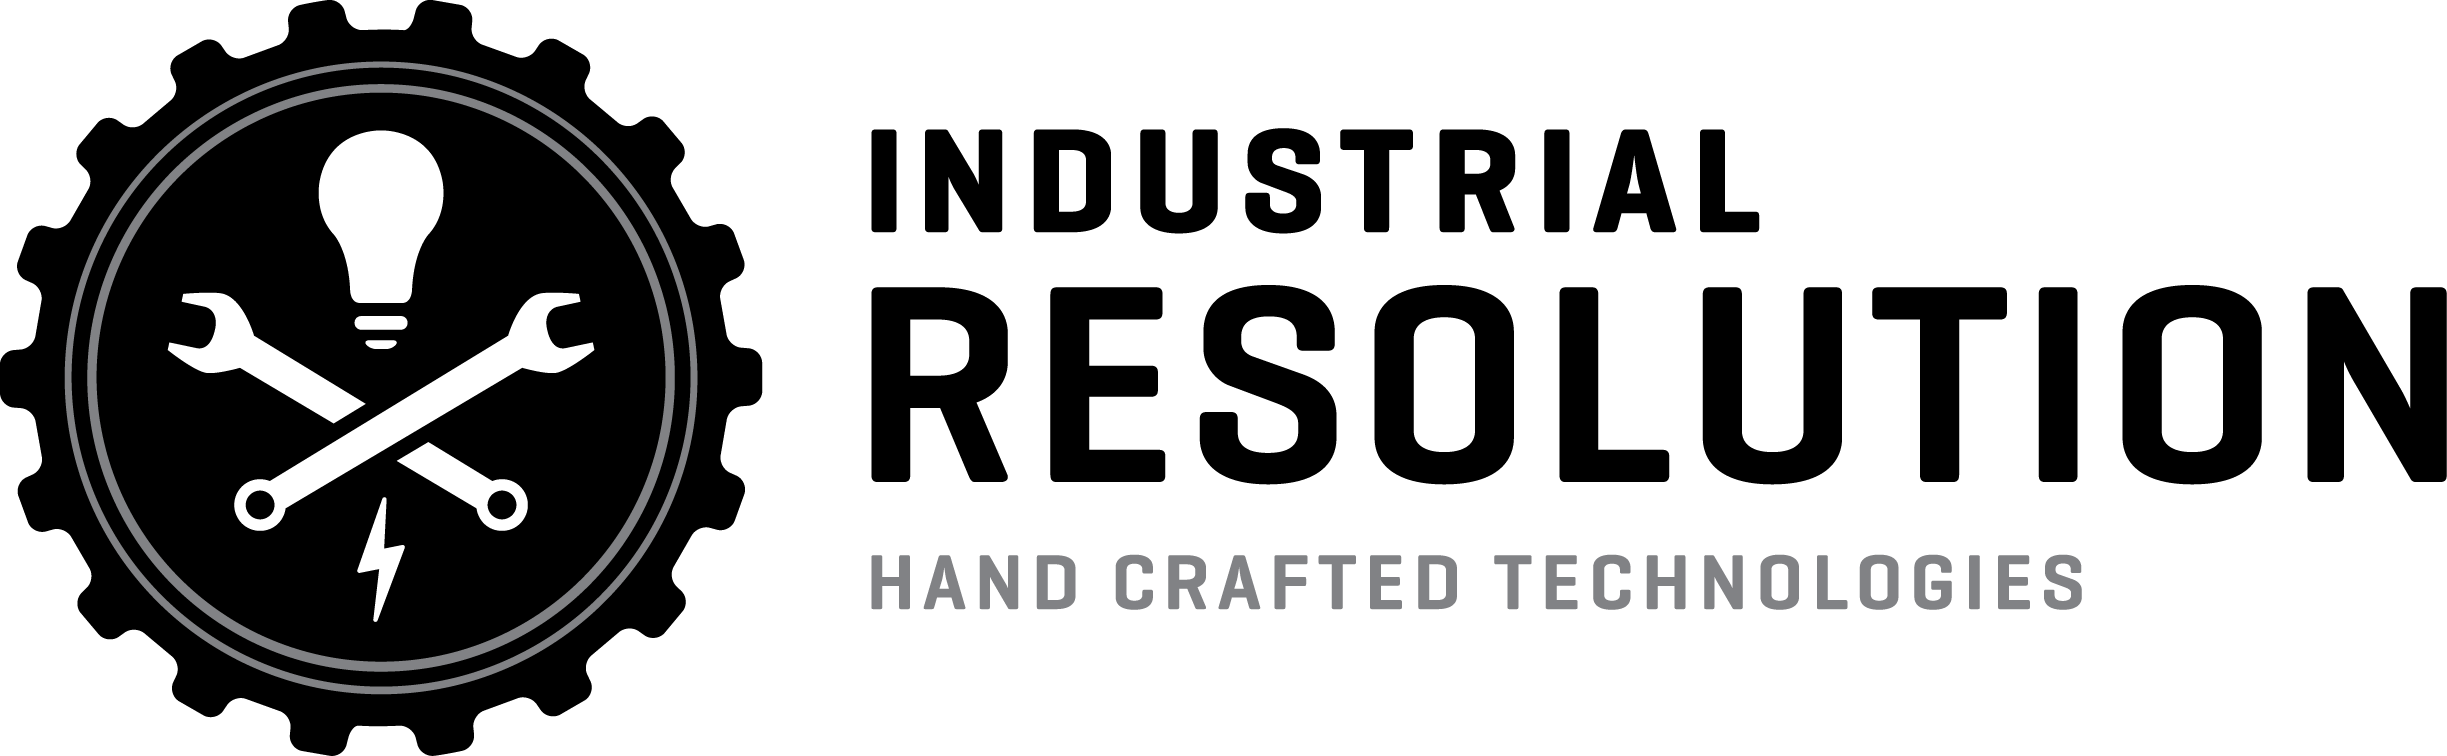 Resolution Logo - Industrial Resolution - CPOSC CPOSC